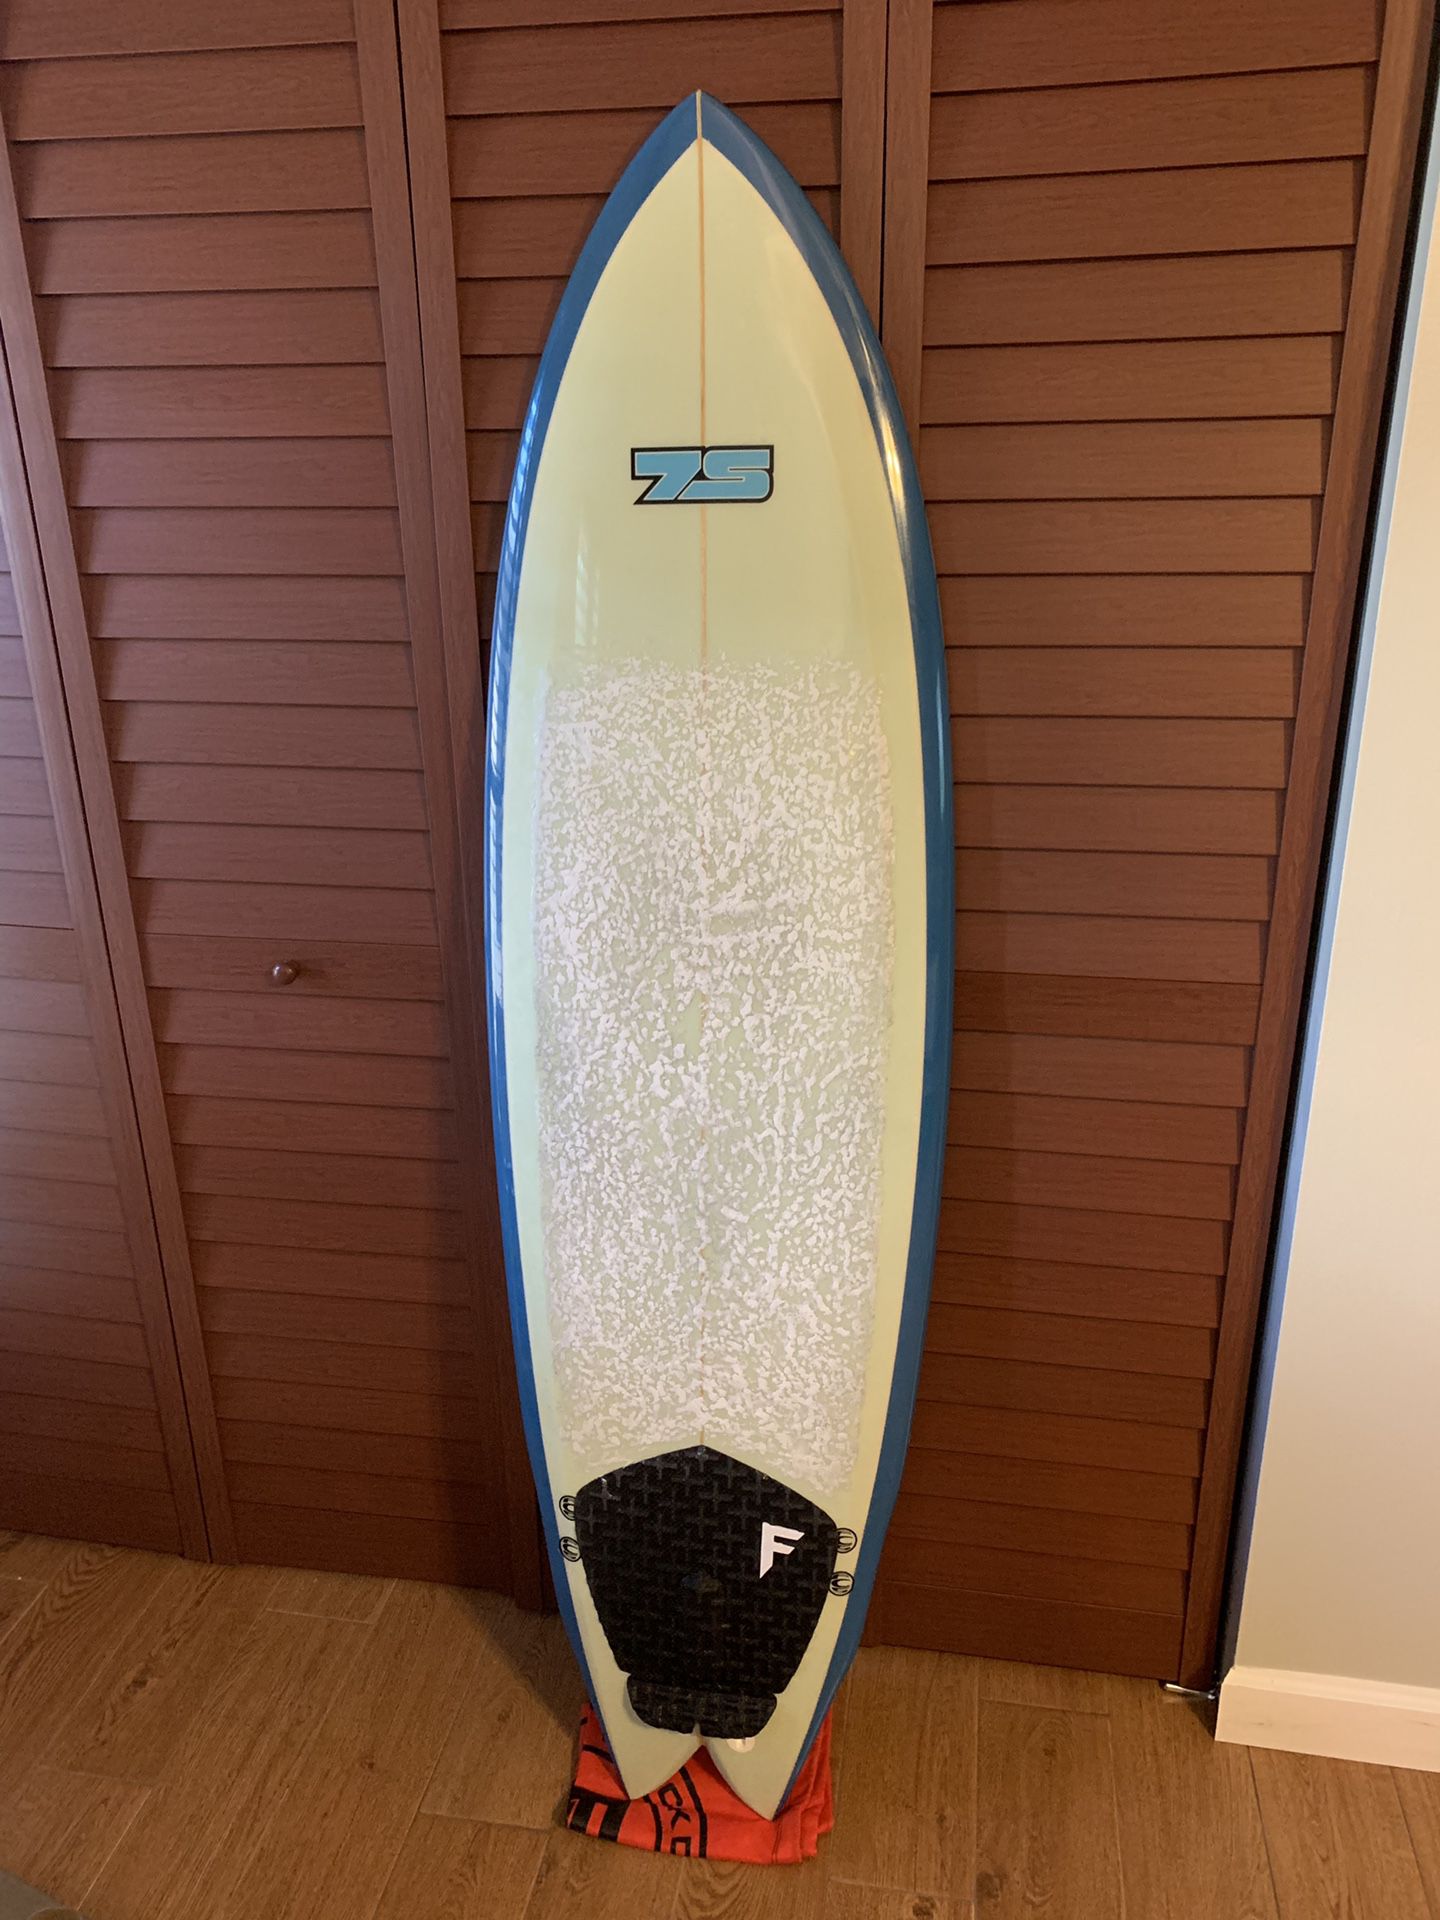 7S superfish surfboard 6’2